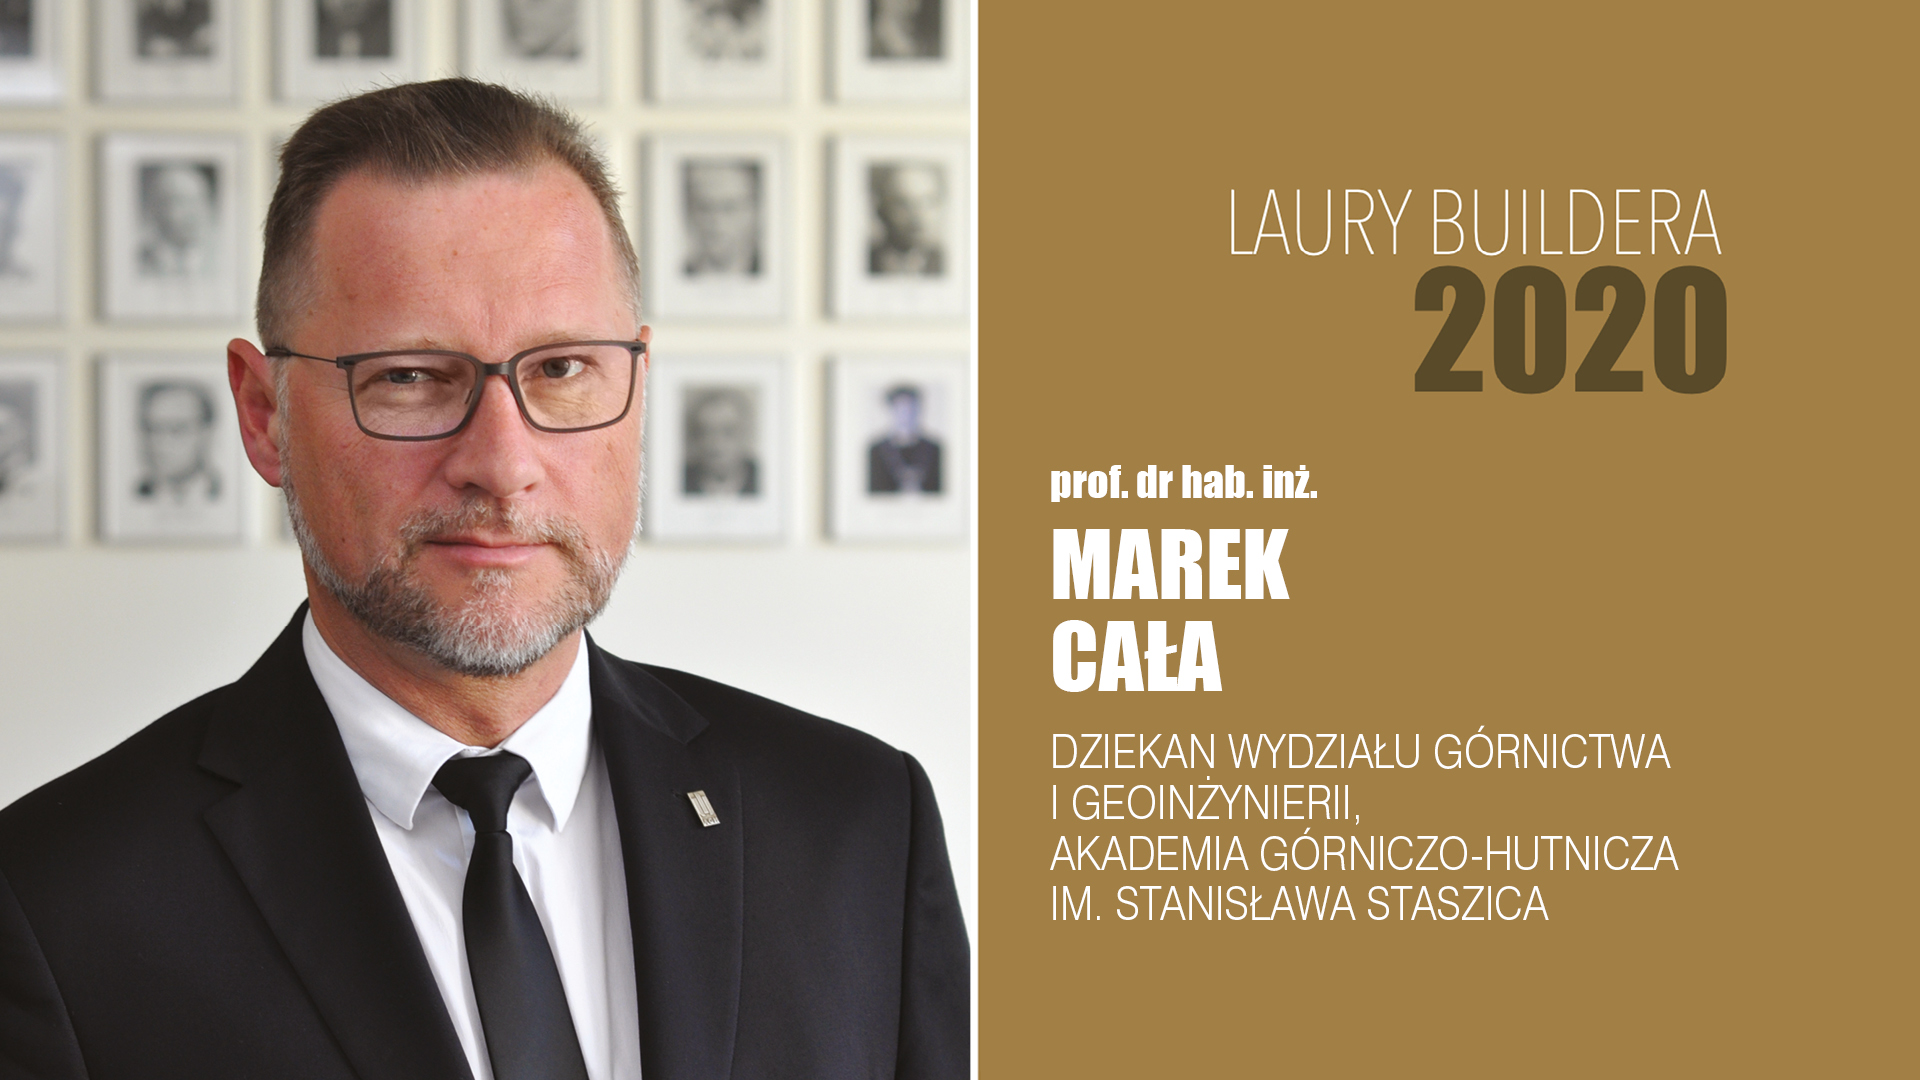 prof. dr hab. inż. Marek Cała – LAURY BUILDERA 2020